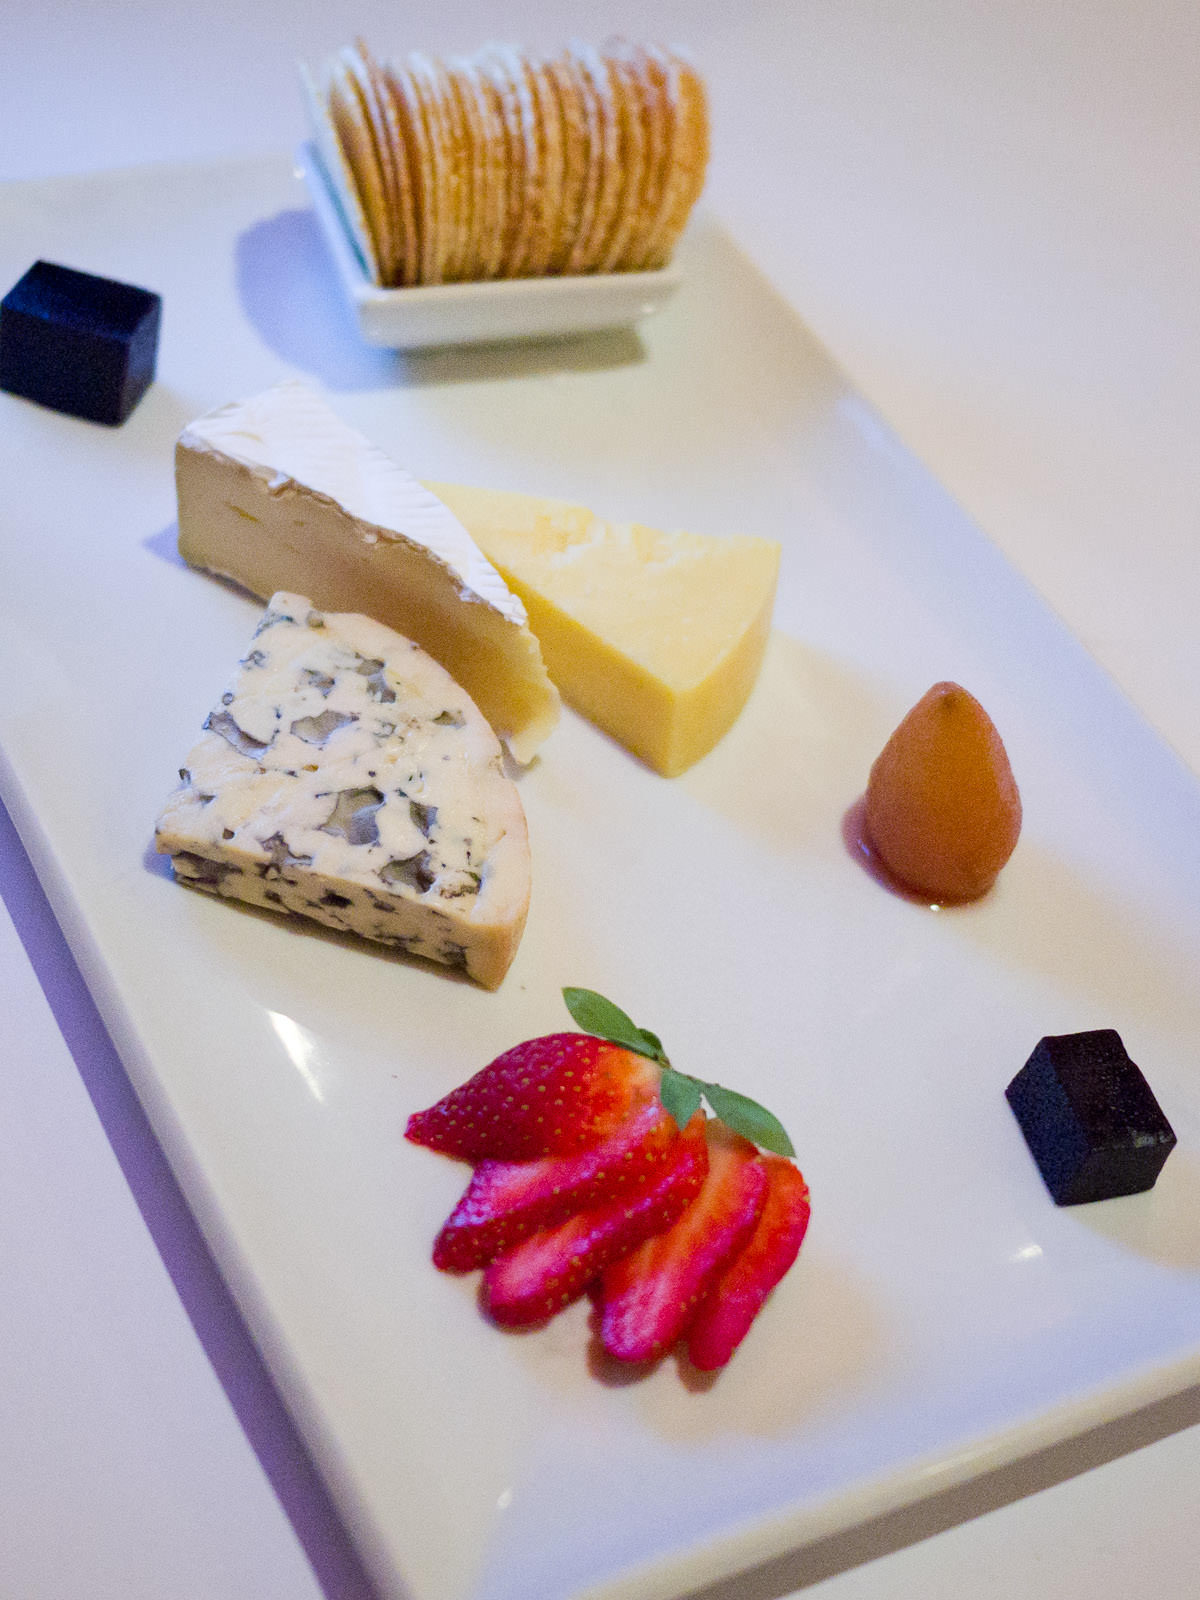 Cheeseboard - Roitelet Brie (France), Fourme d'Ambert Blue (France), Maffra clothbound cheddar (Victoria)